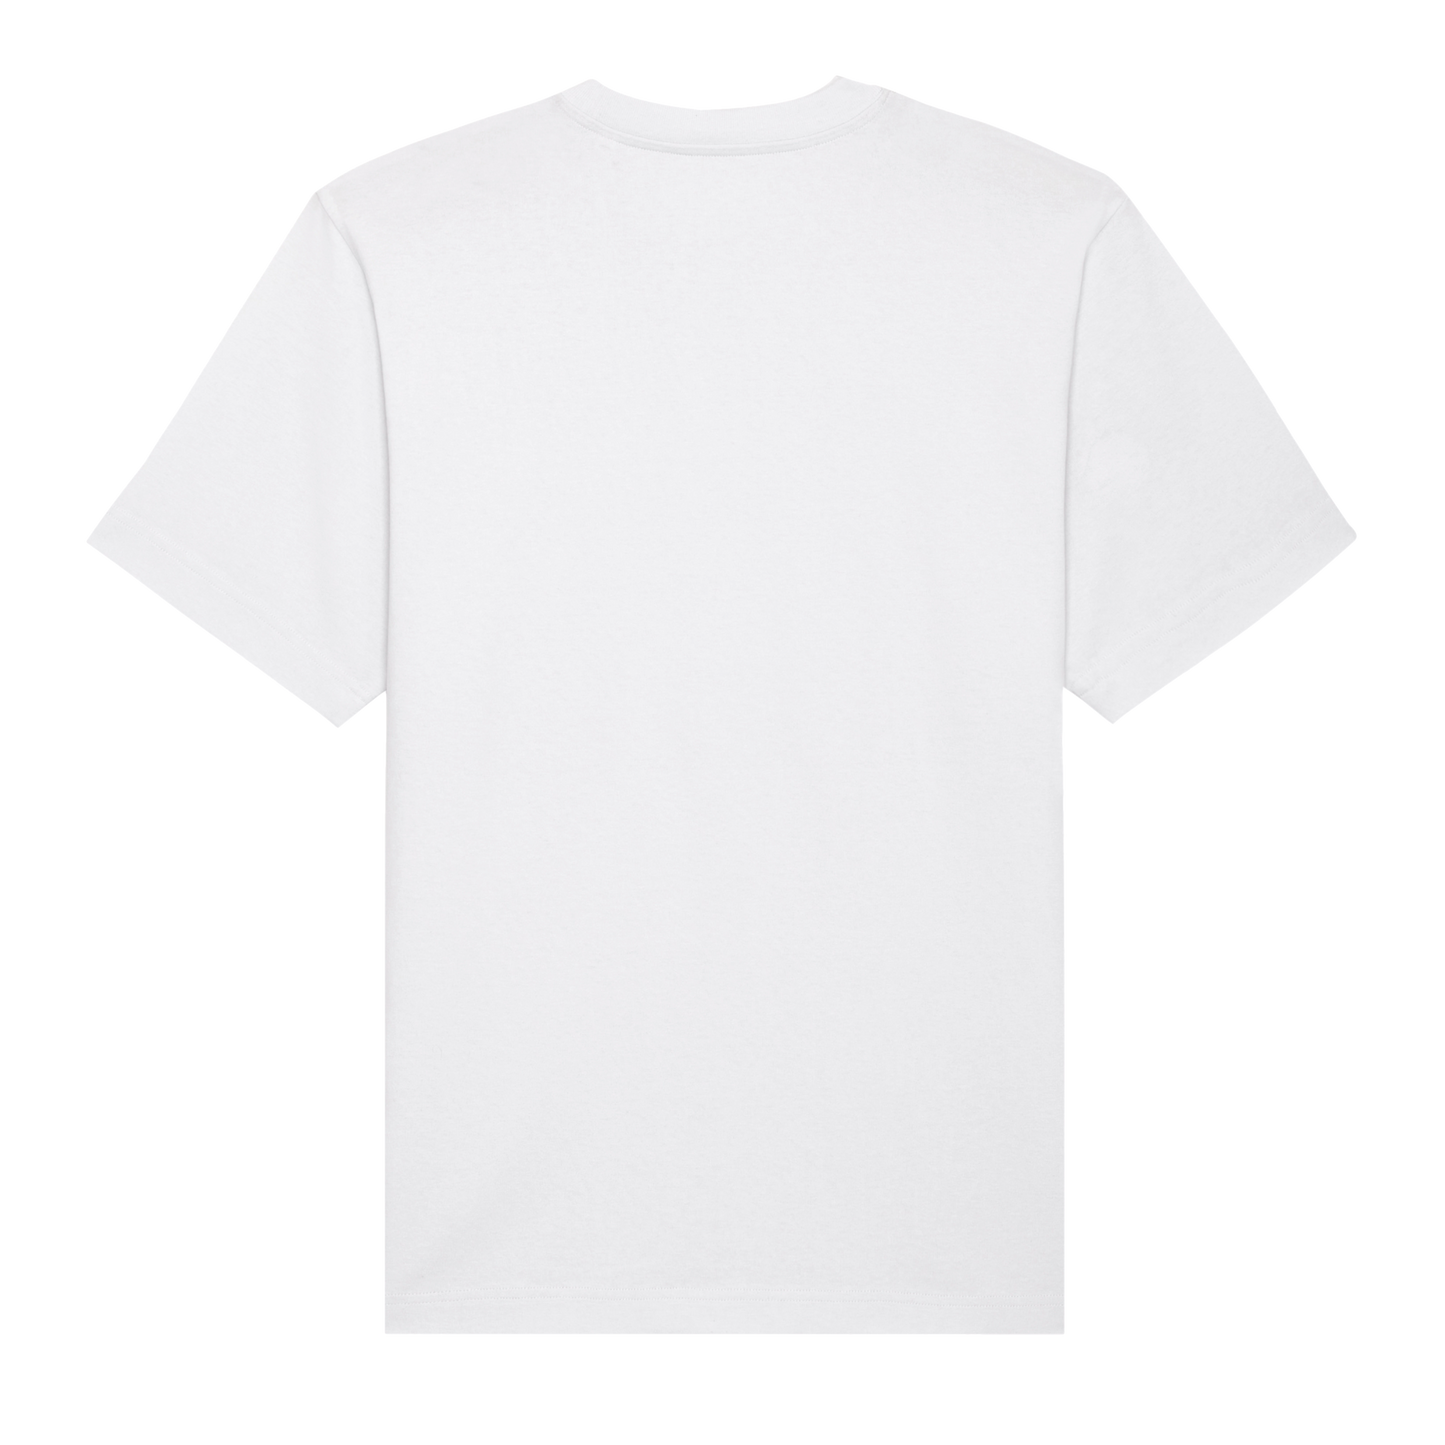 Streetwear Is Art - Premium T-Shirt in White